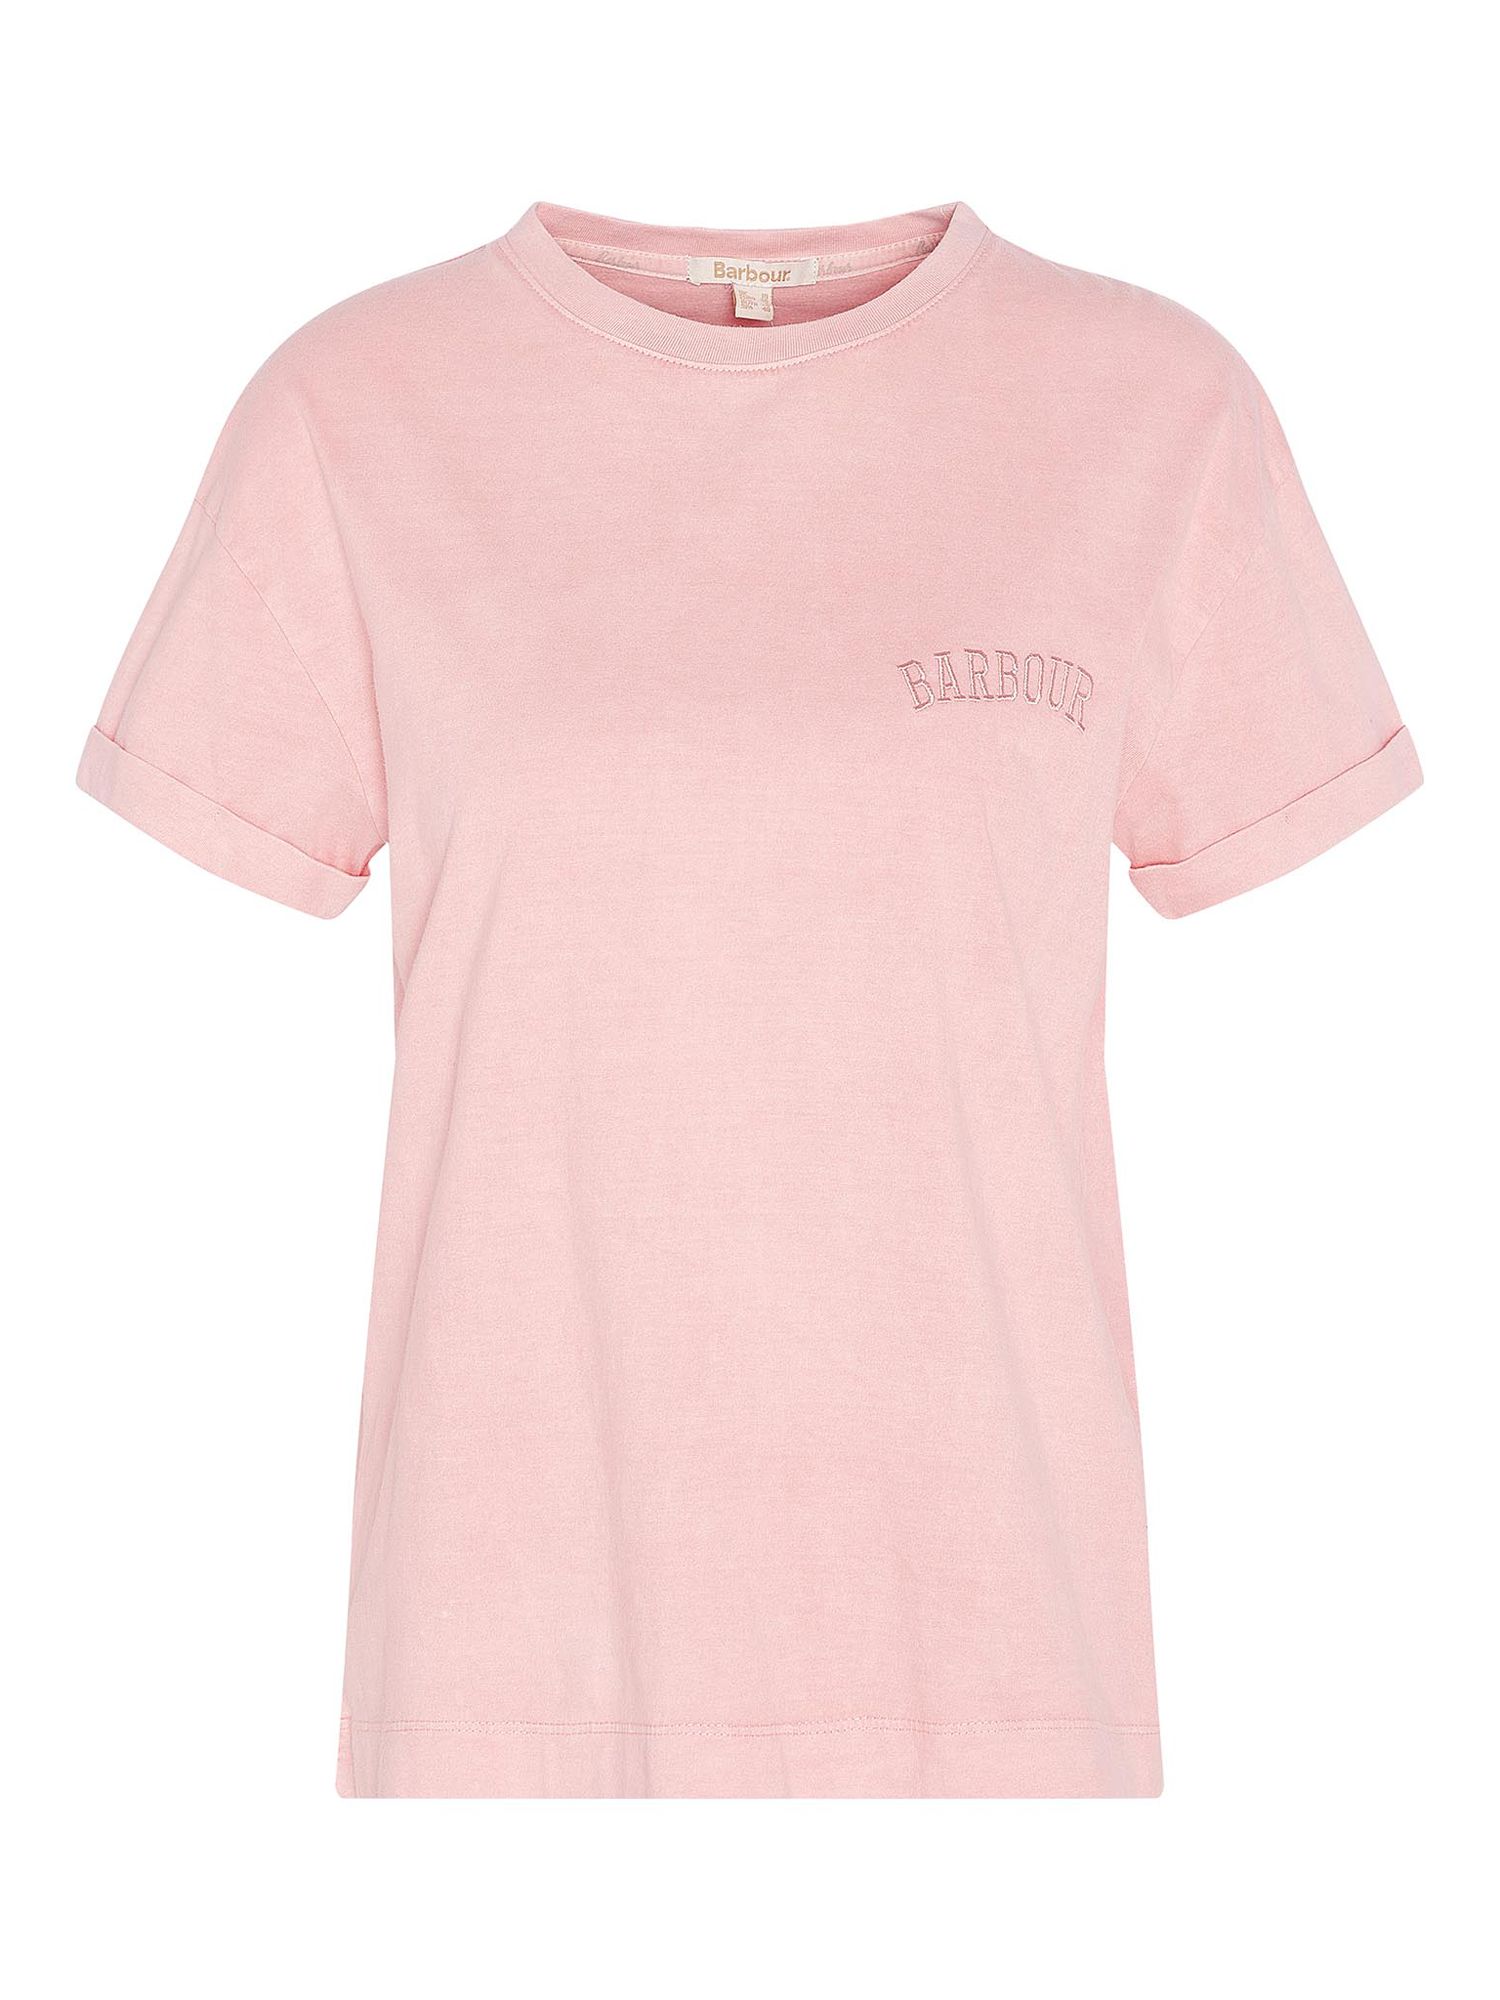 Barbour Sandgate T-Shirt, Shell Pink at John Lewis & Partners